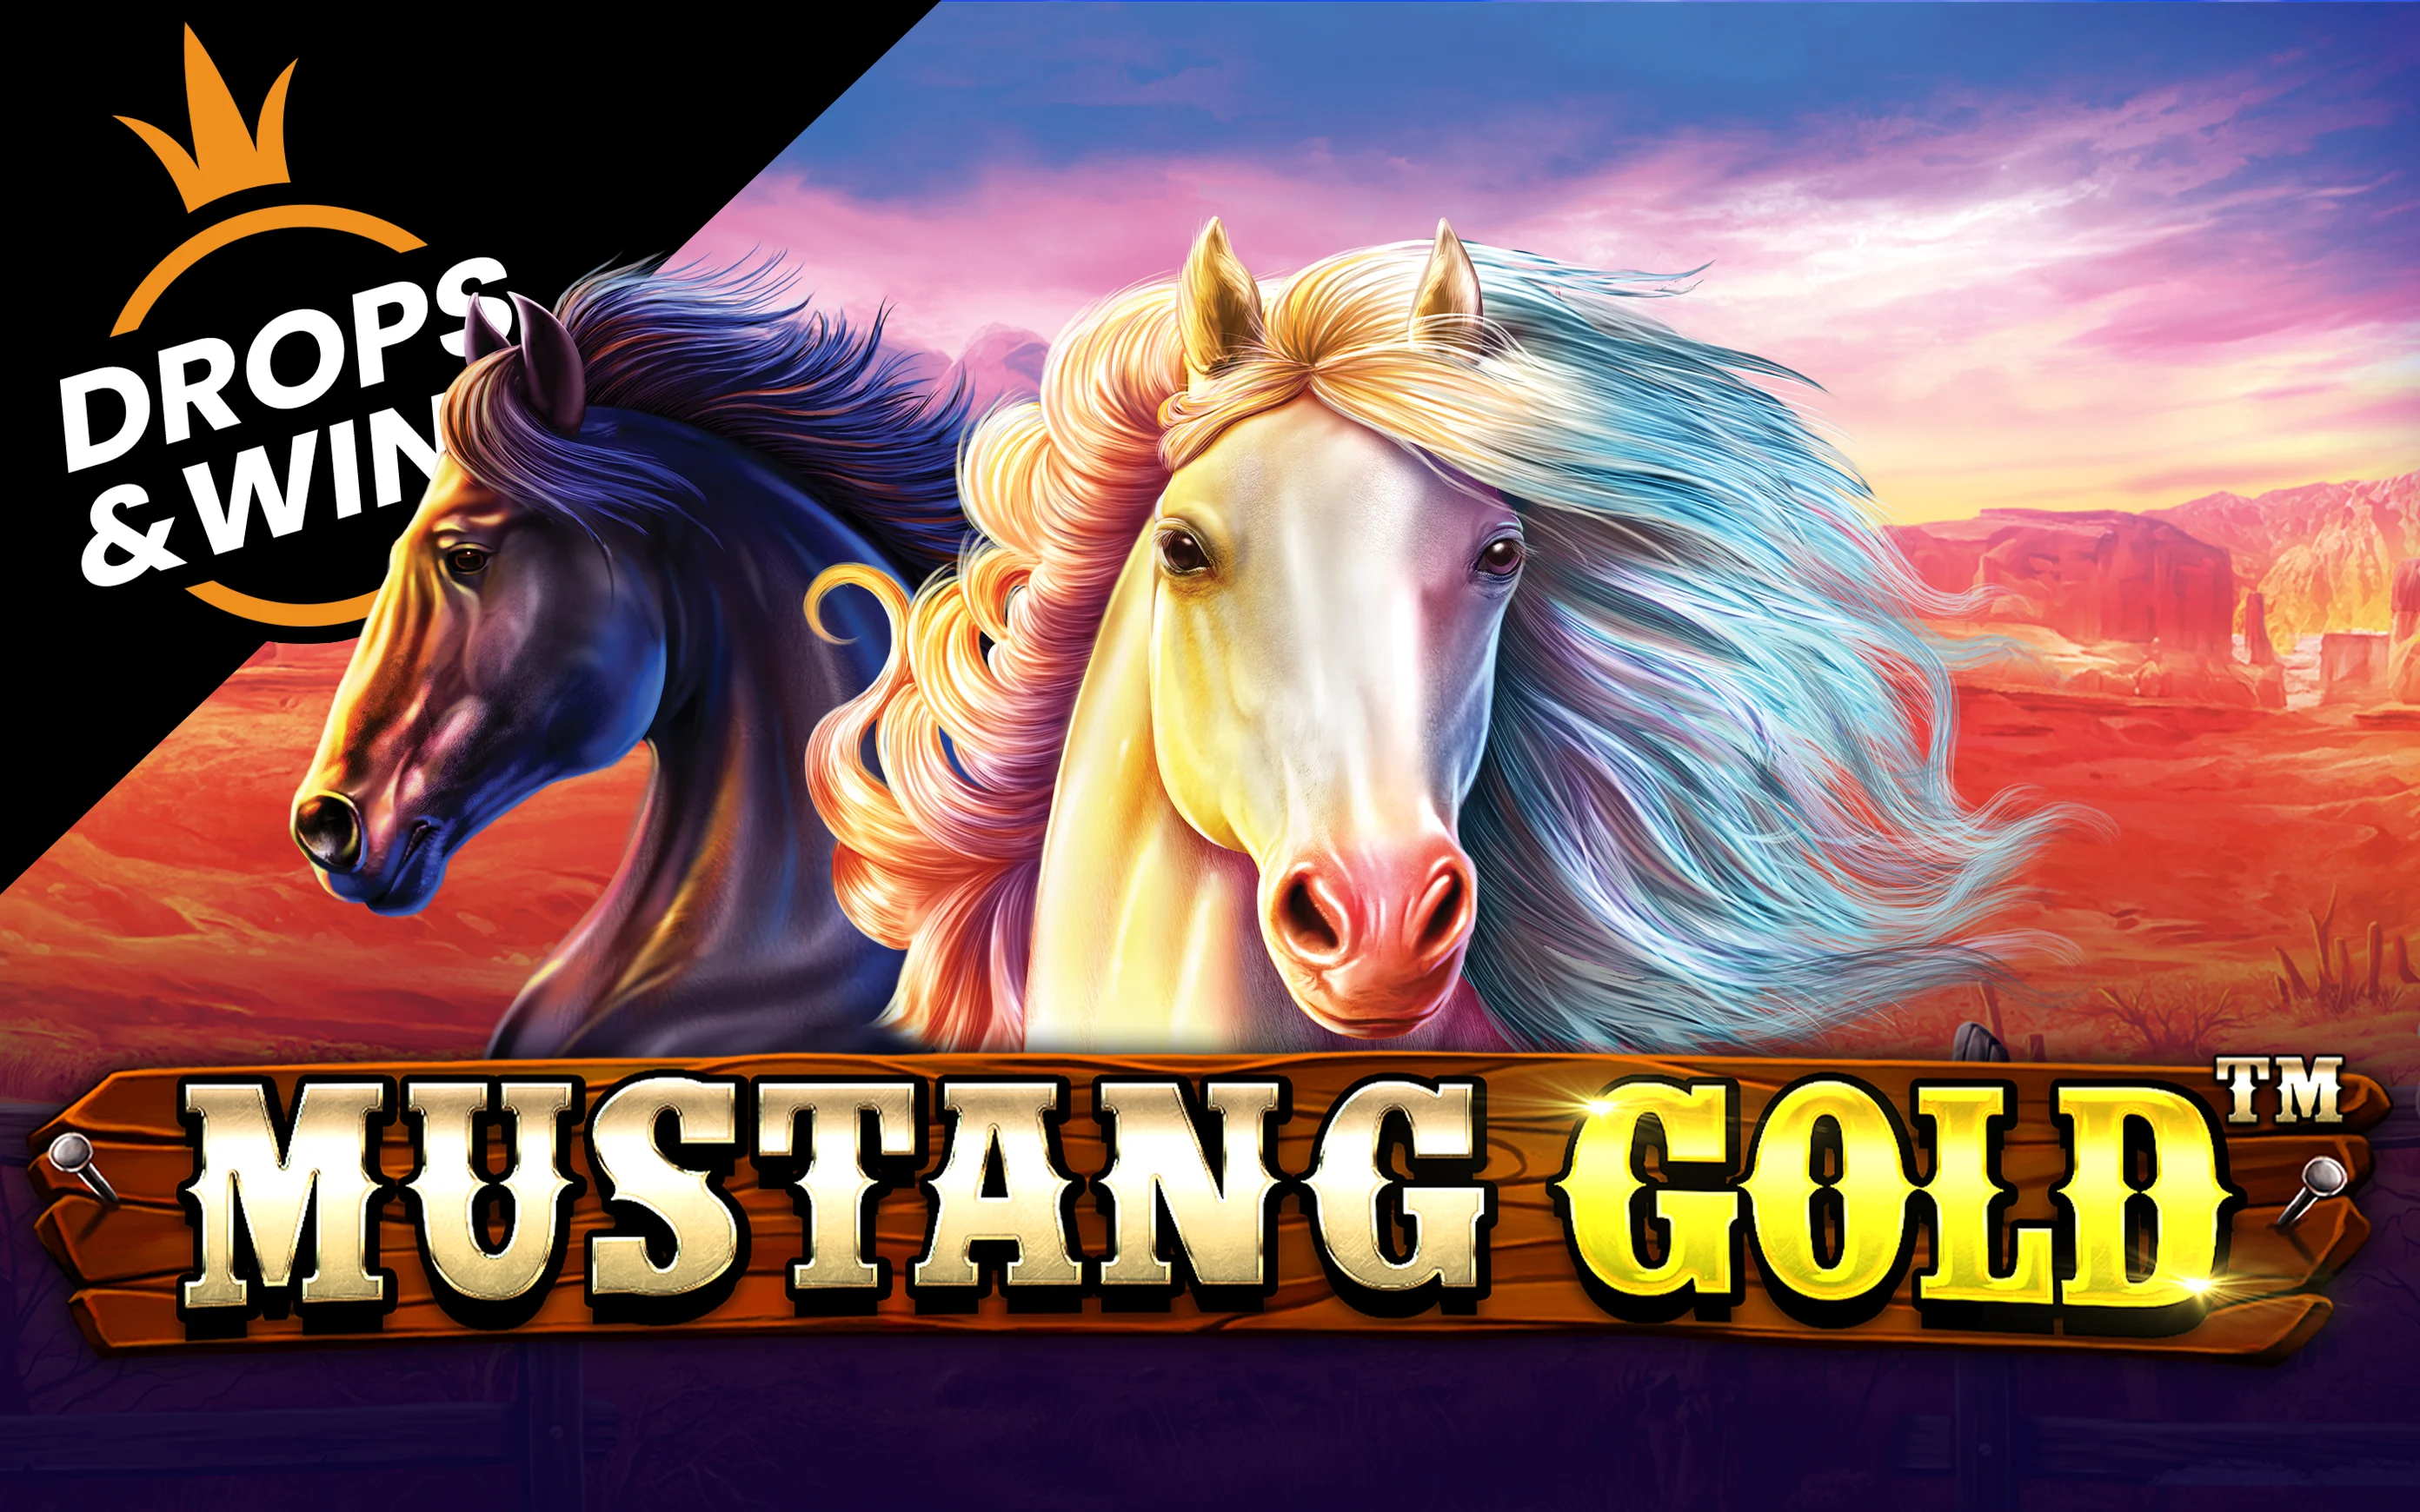 Play Mustang Gold on Starcasino.be online casino